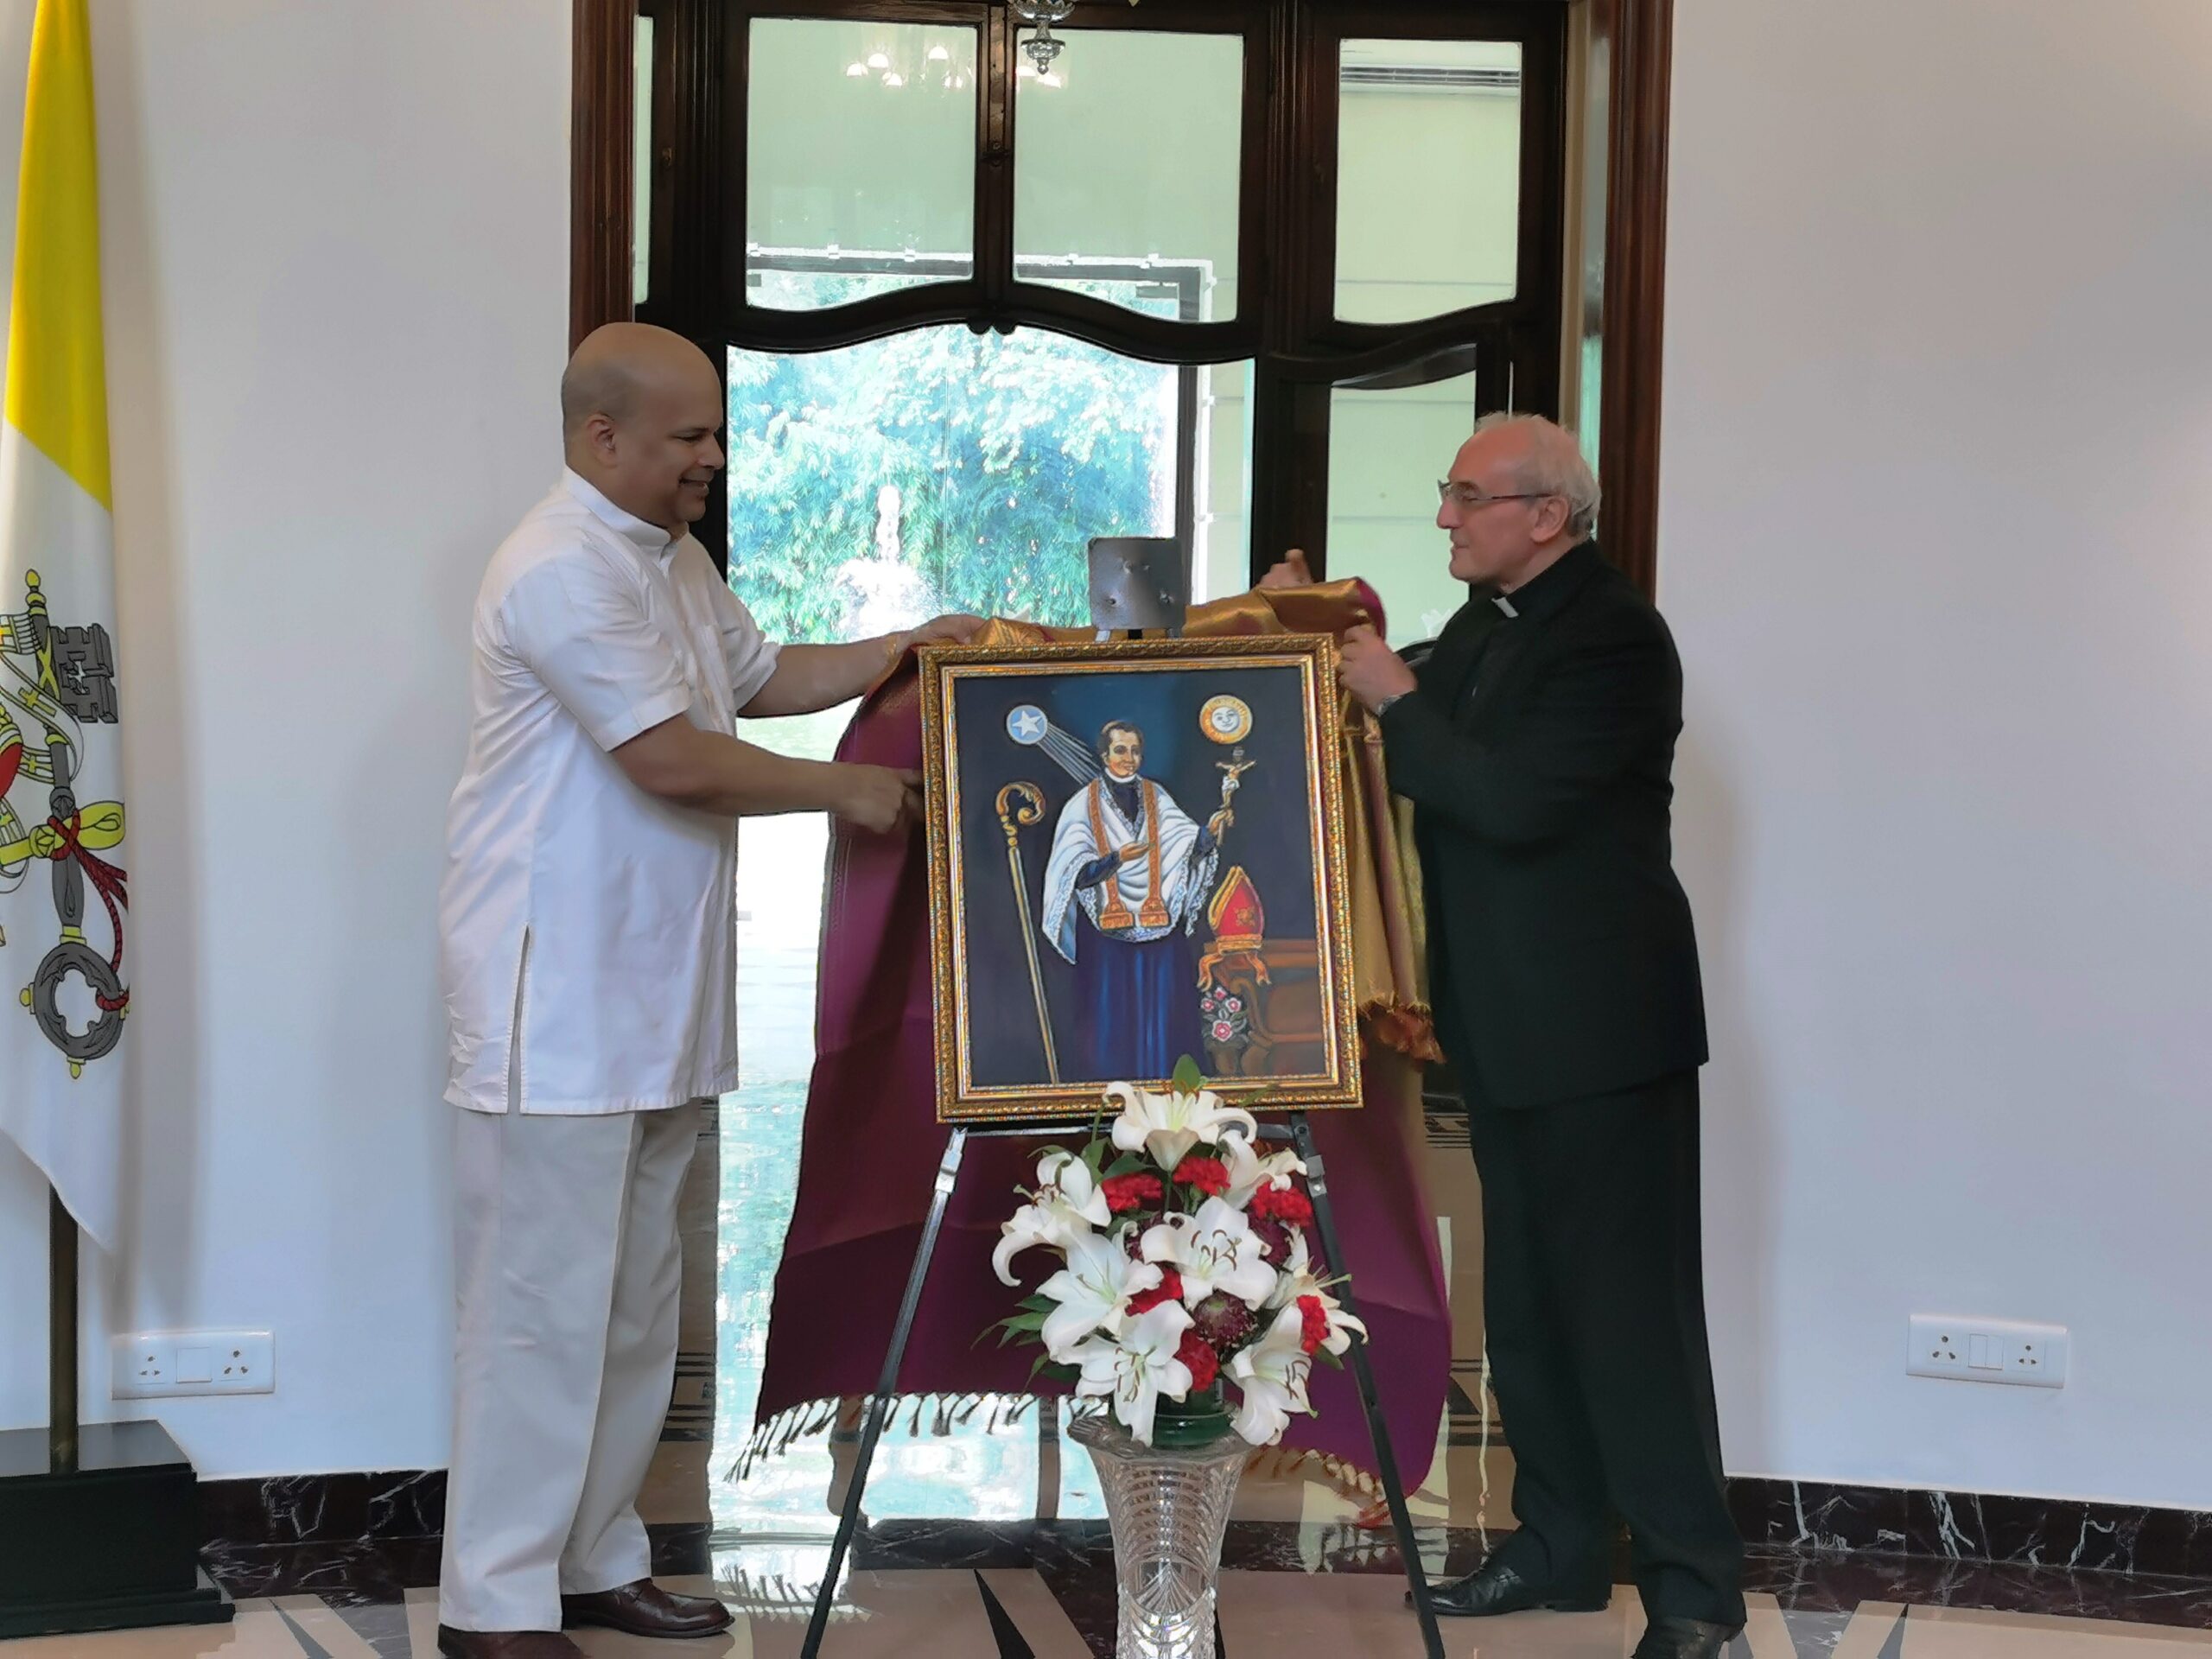 A Portrait of St. Joseph Vaz, the ‘Apostle of Sri Lanka’ unveiled at the Apostolic Nunciature in New Delhi